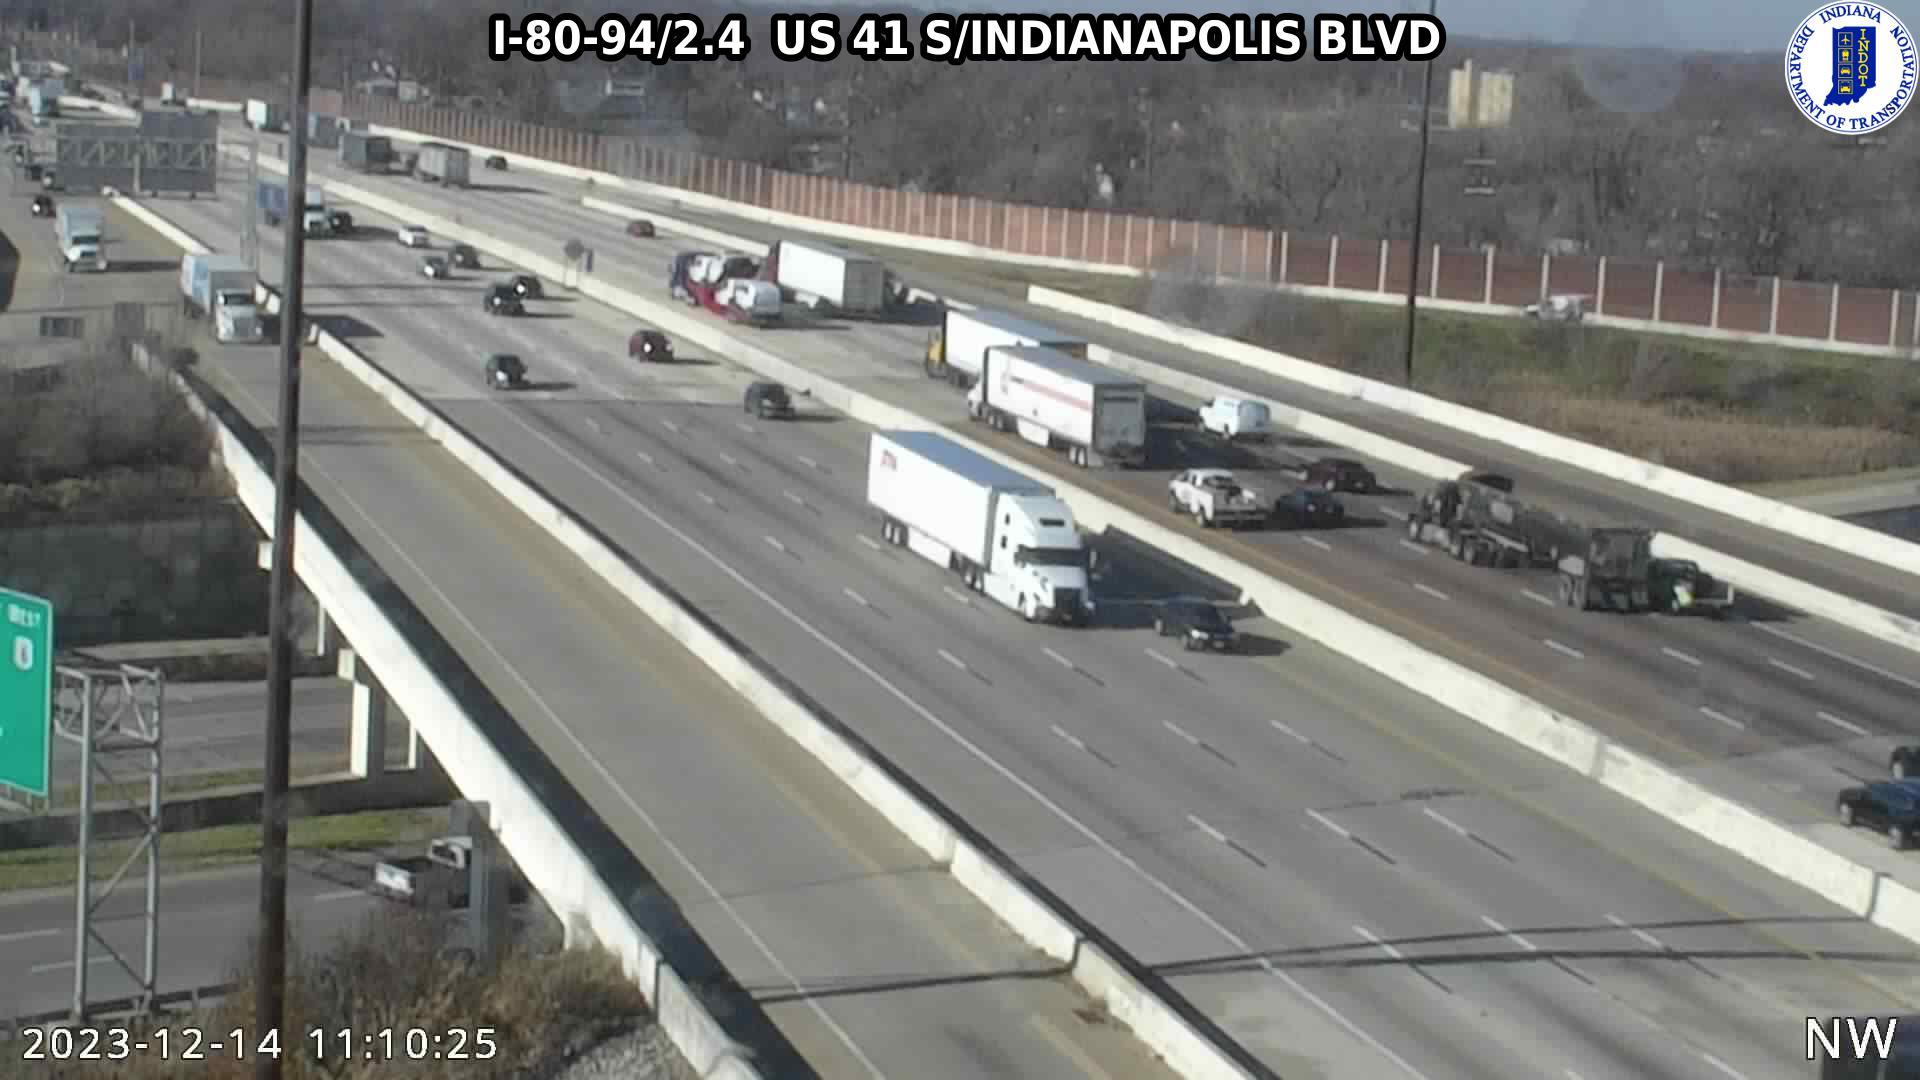 Traffic Cam Hammond: I-94: I-80-94/2.4 US 41 S/INDIANAPOLIS BLVD Player